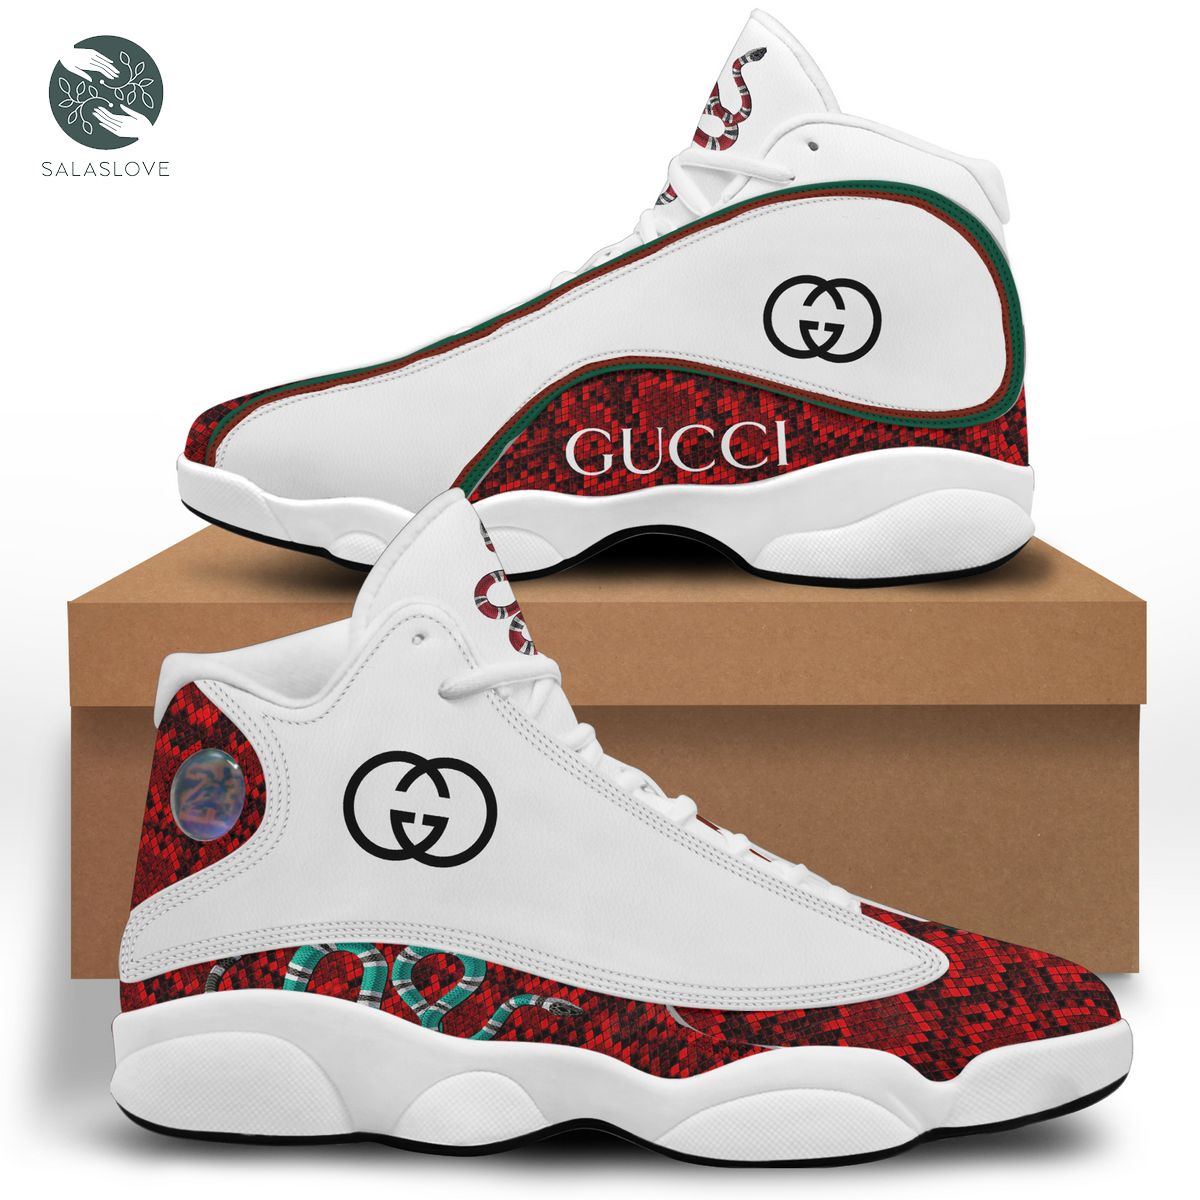 Gucci snake air jordan 13 sneakers shoes gucci gifts for men women